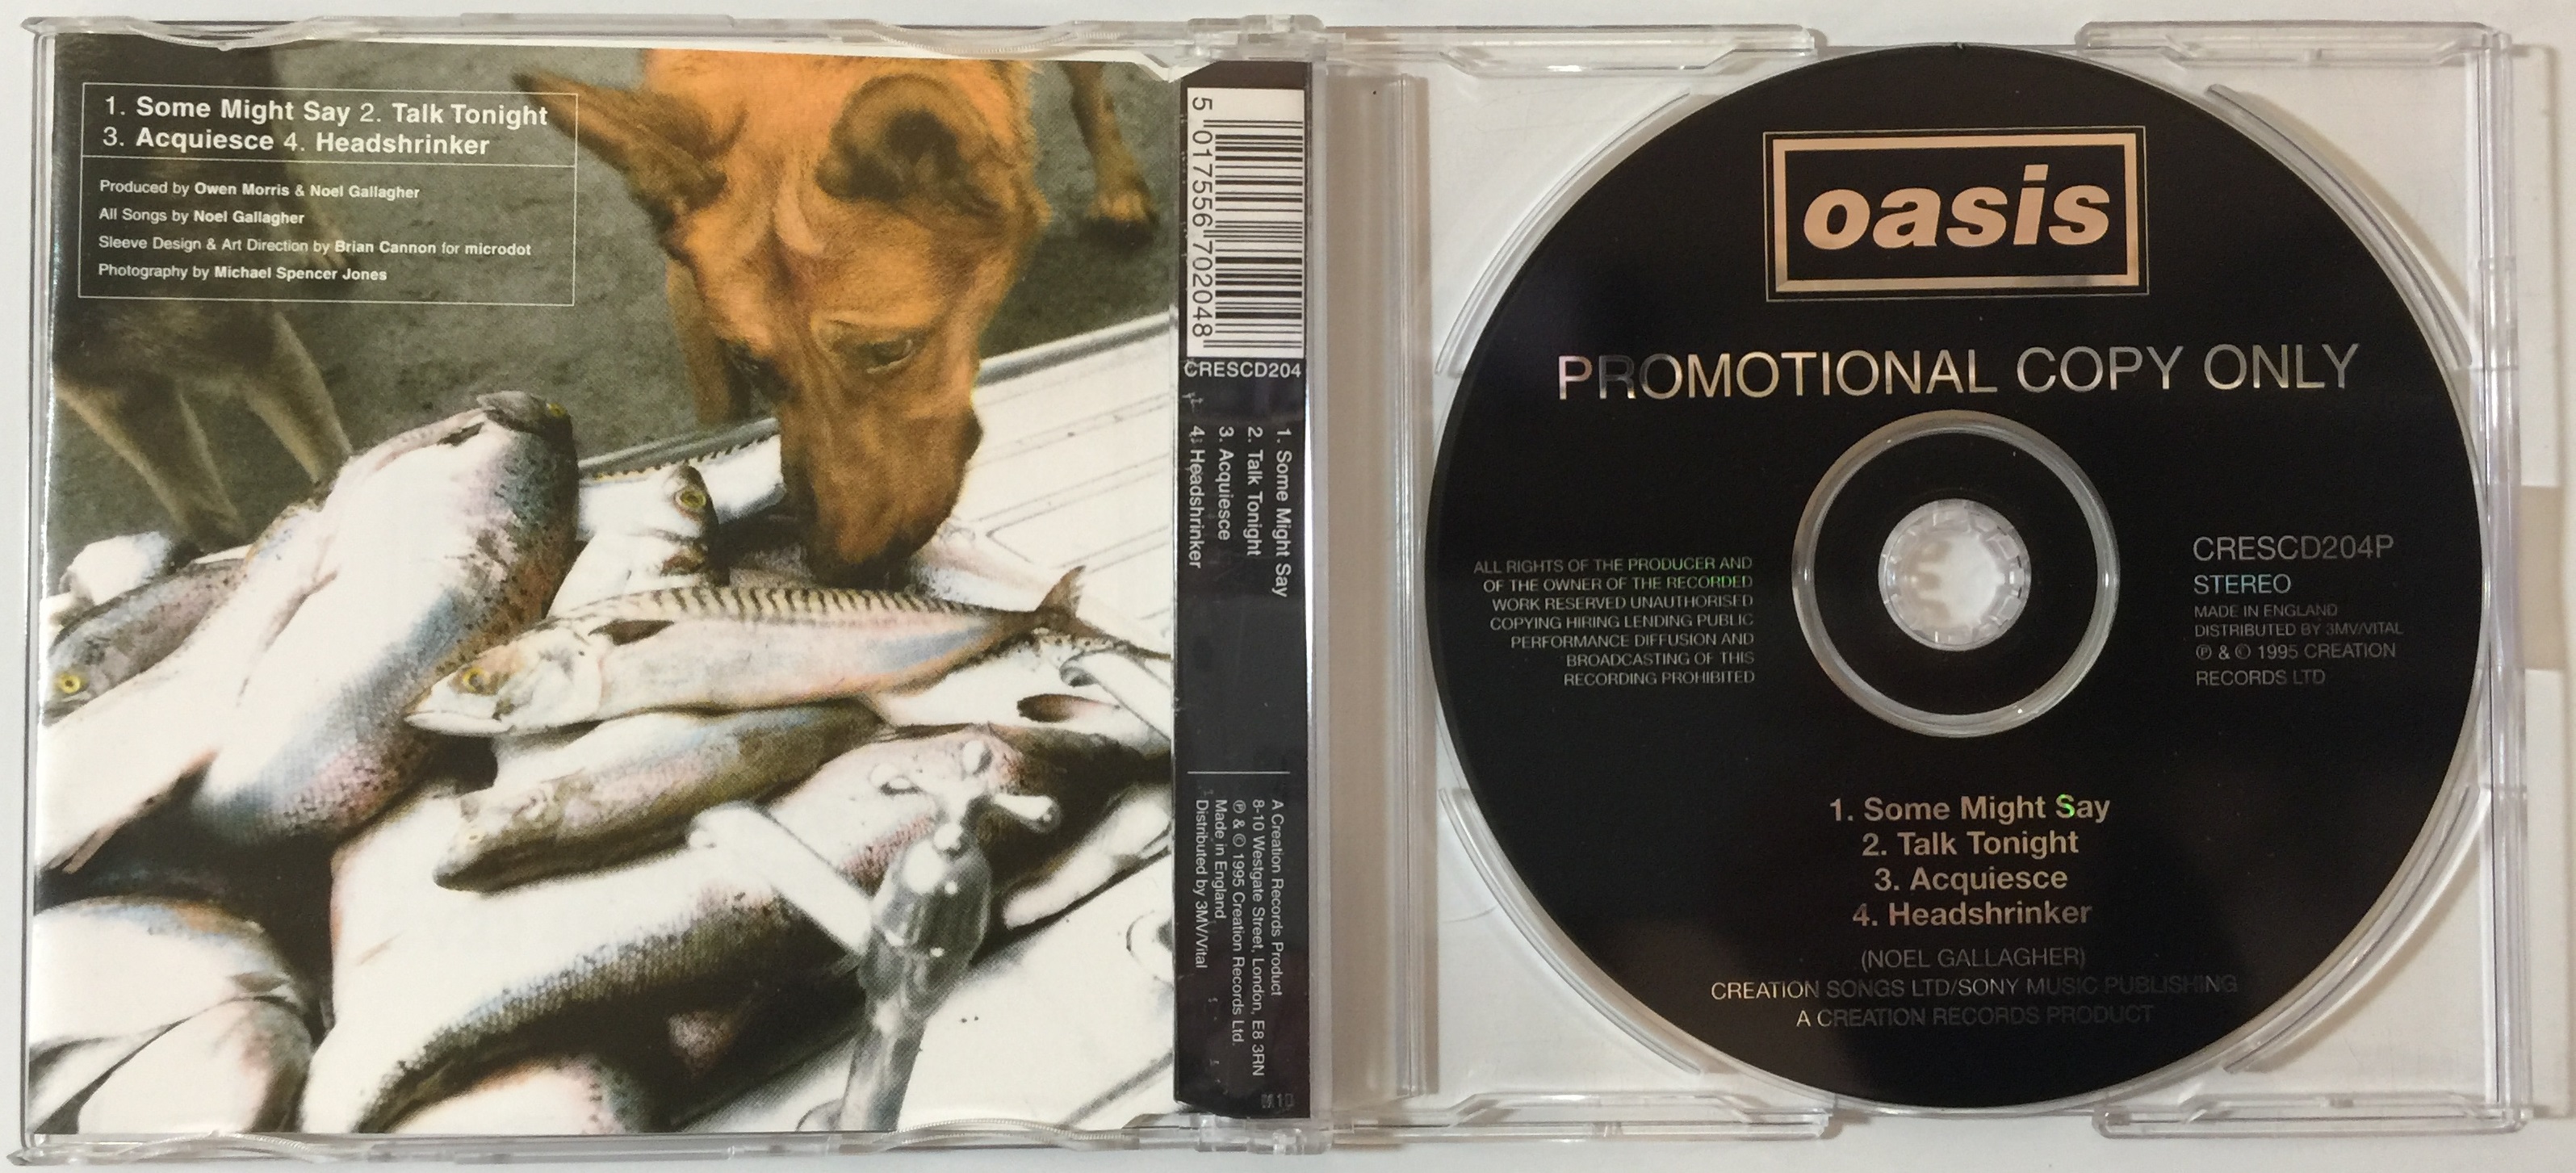 OASIS - PROMO CDs & CASSETTE. - Image 5 of 5